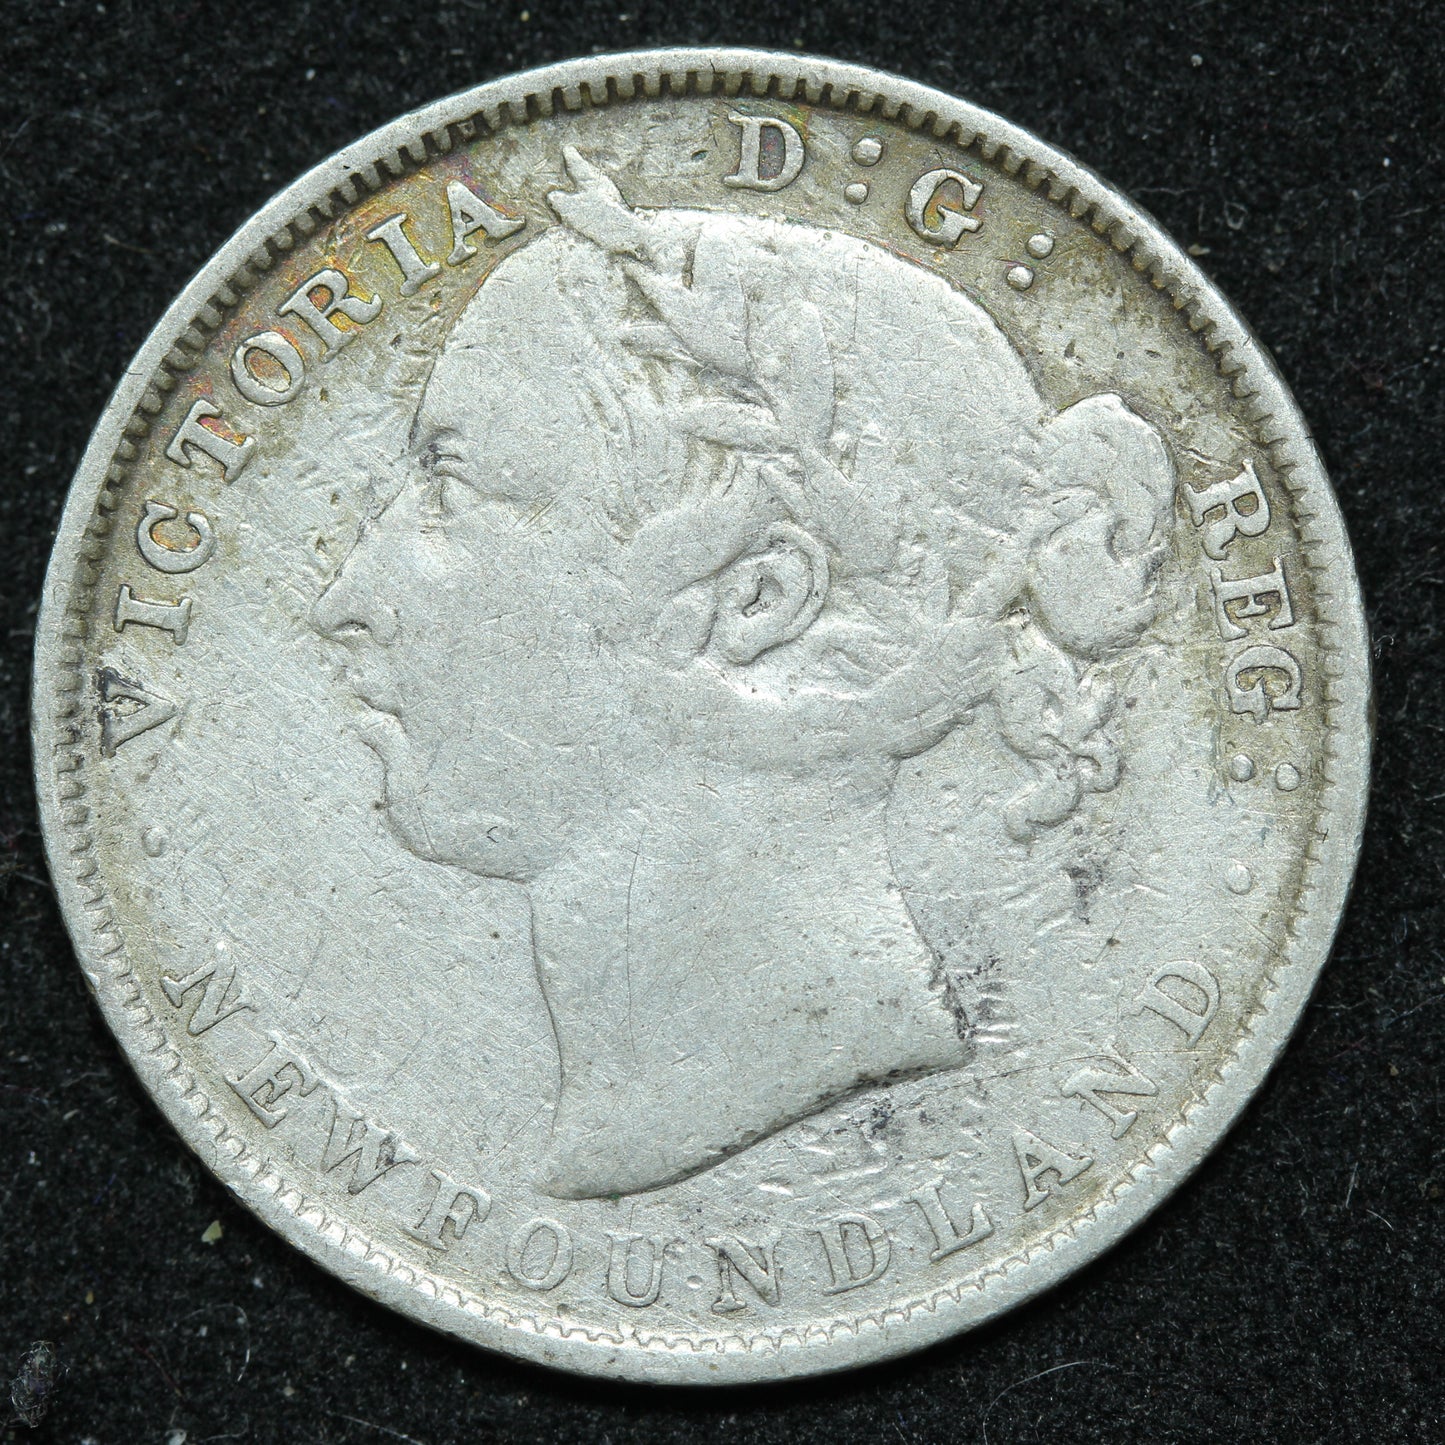 1900 Newfoundland 20 Cents Silver Coin - Victoria - KM #4